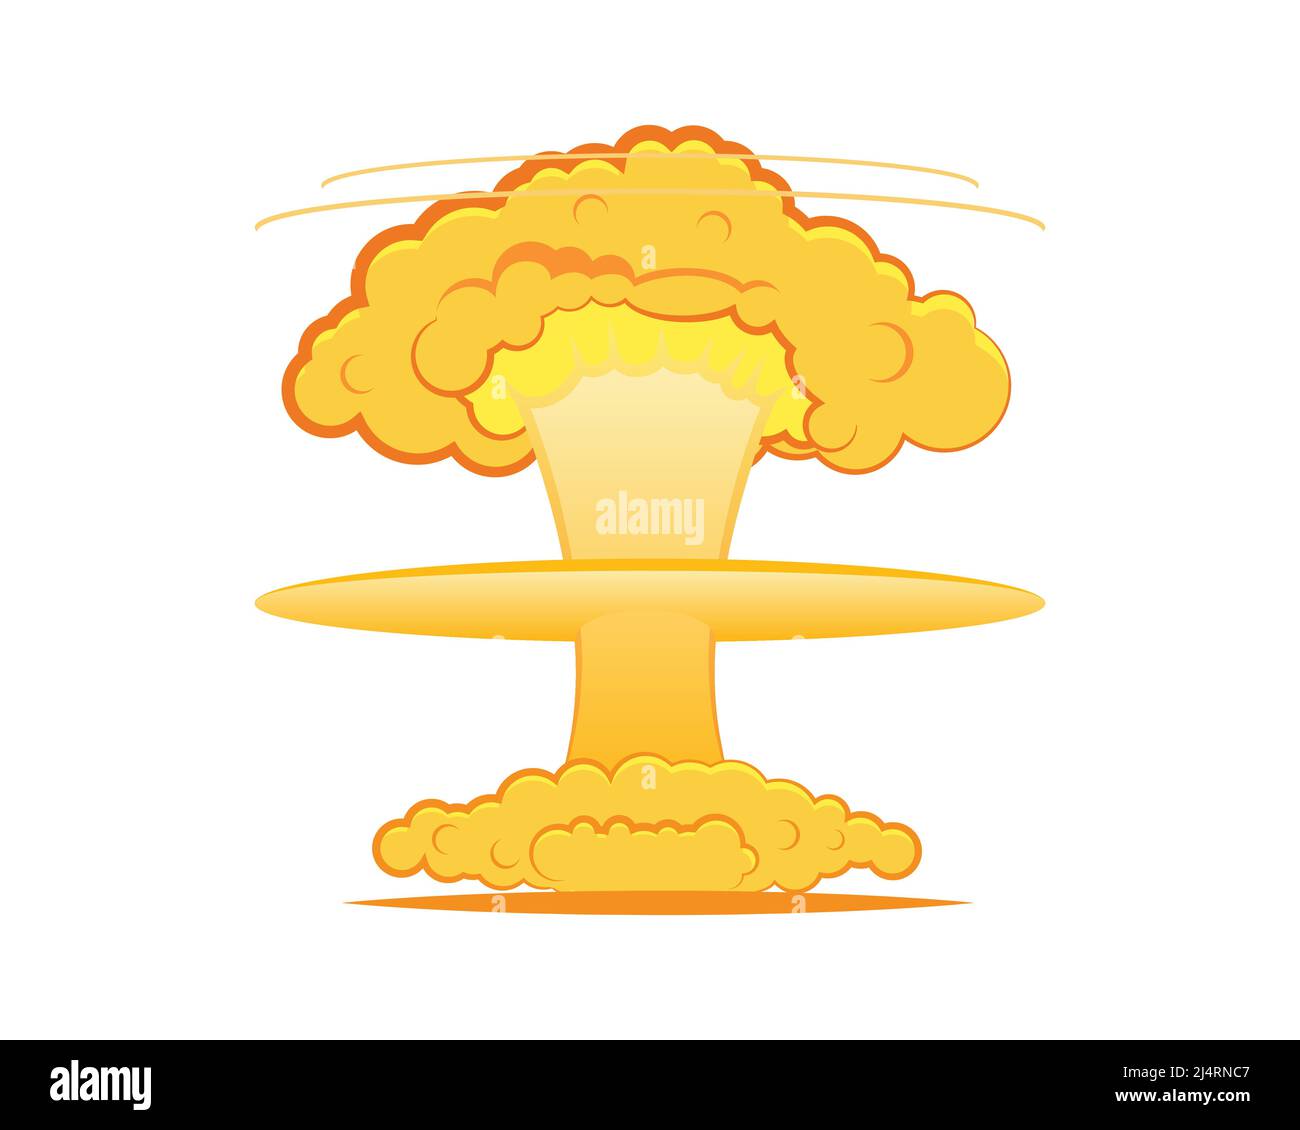 Big Bomb Explosion Illustration Vector Stock Vector